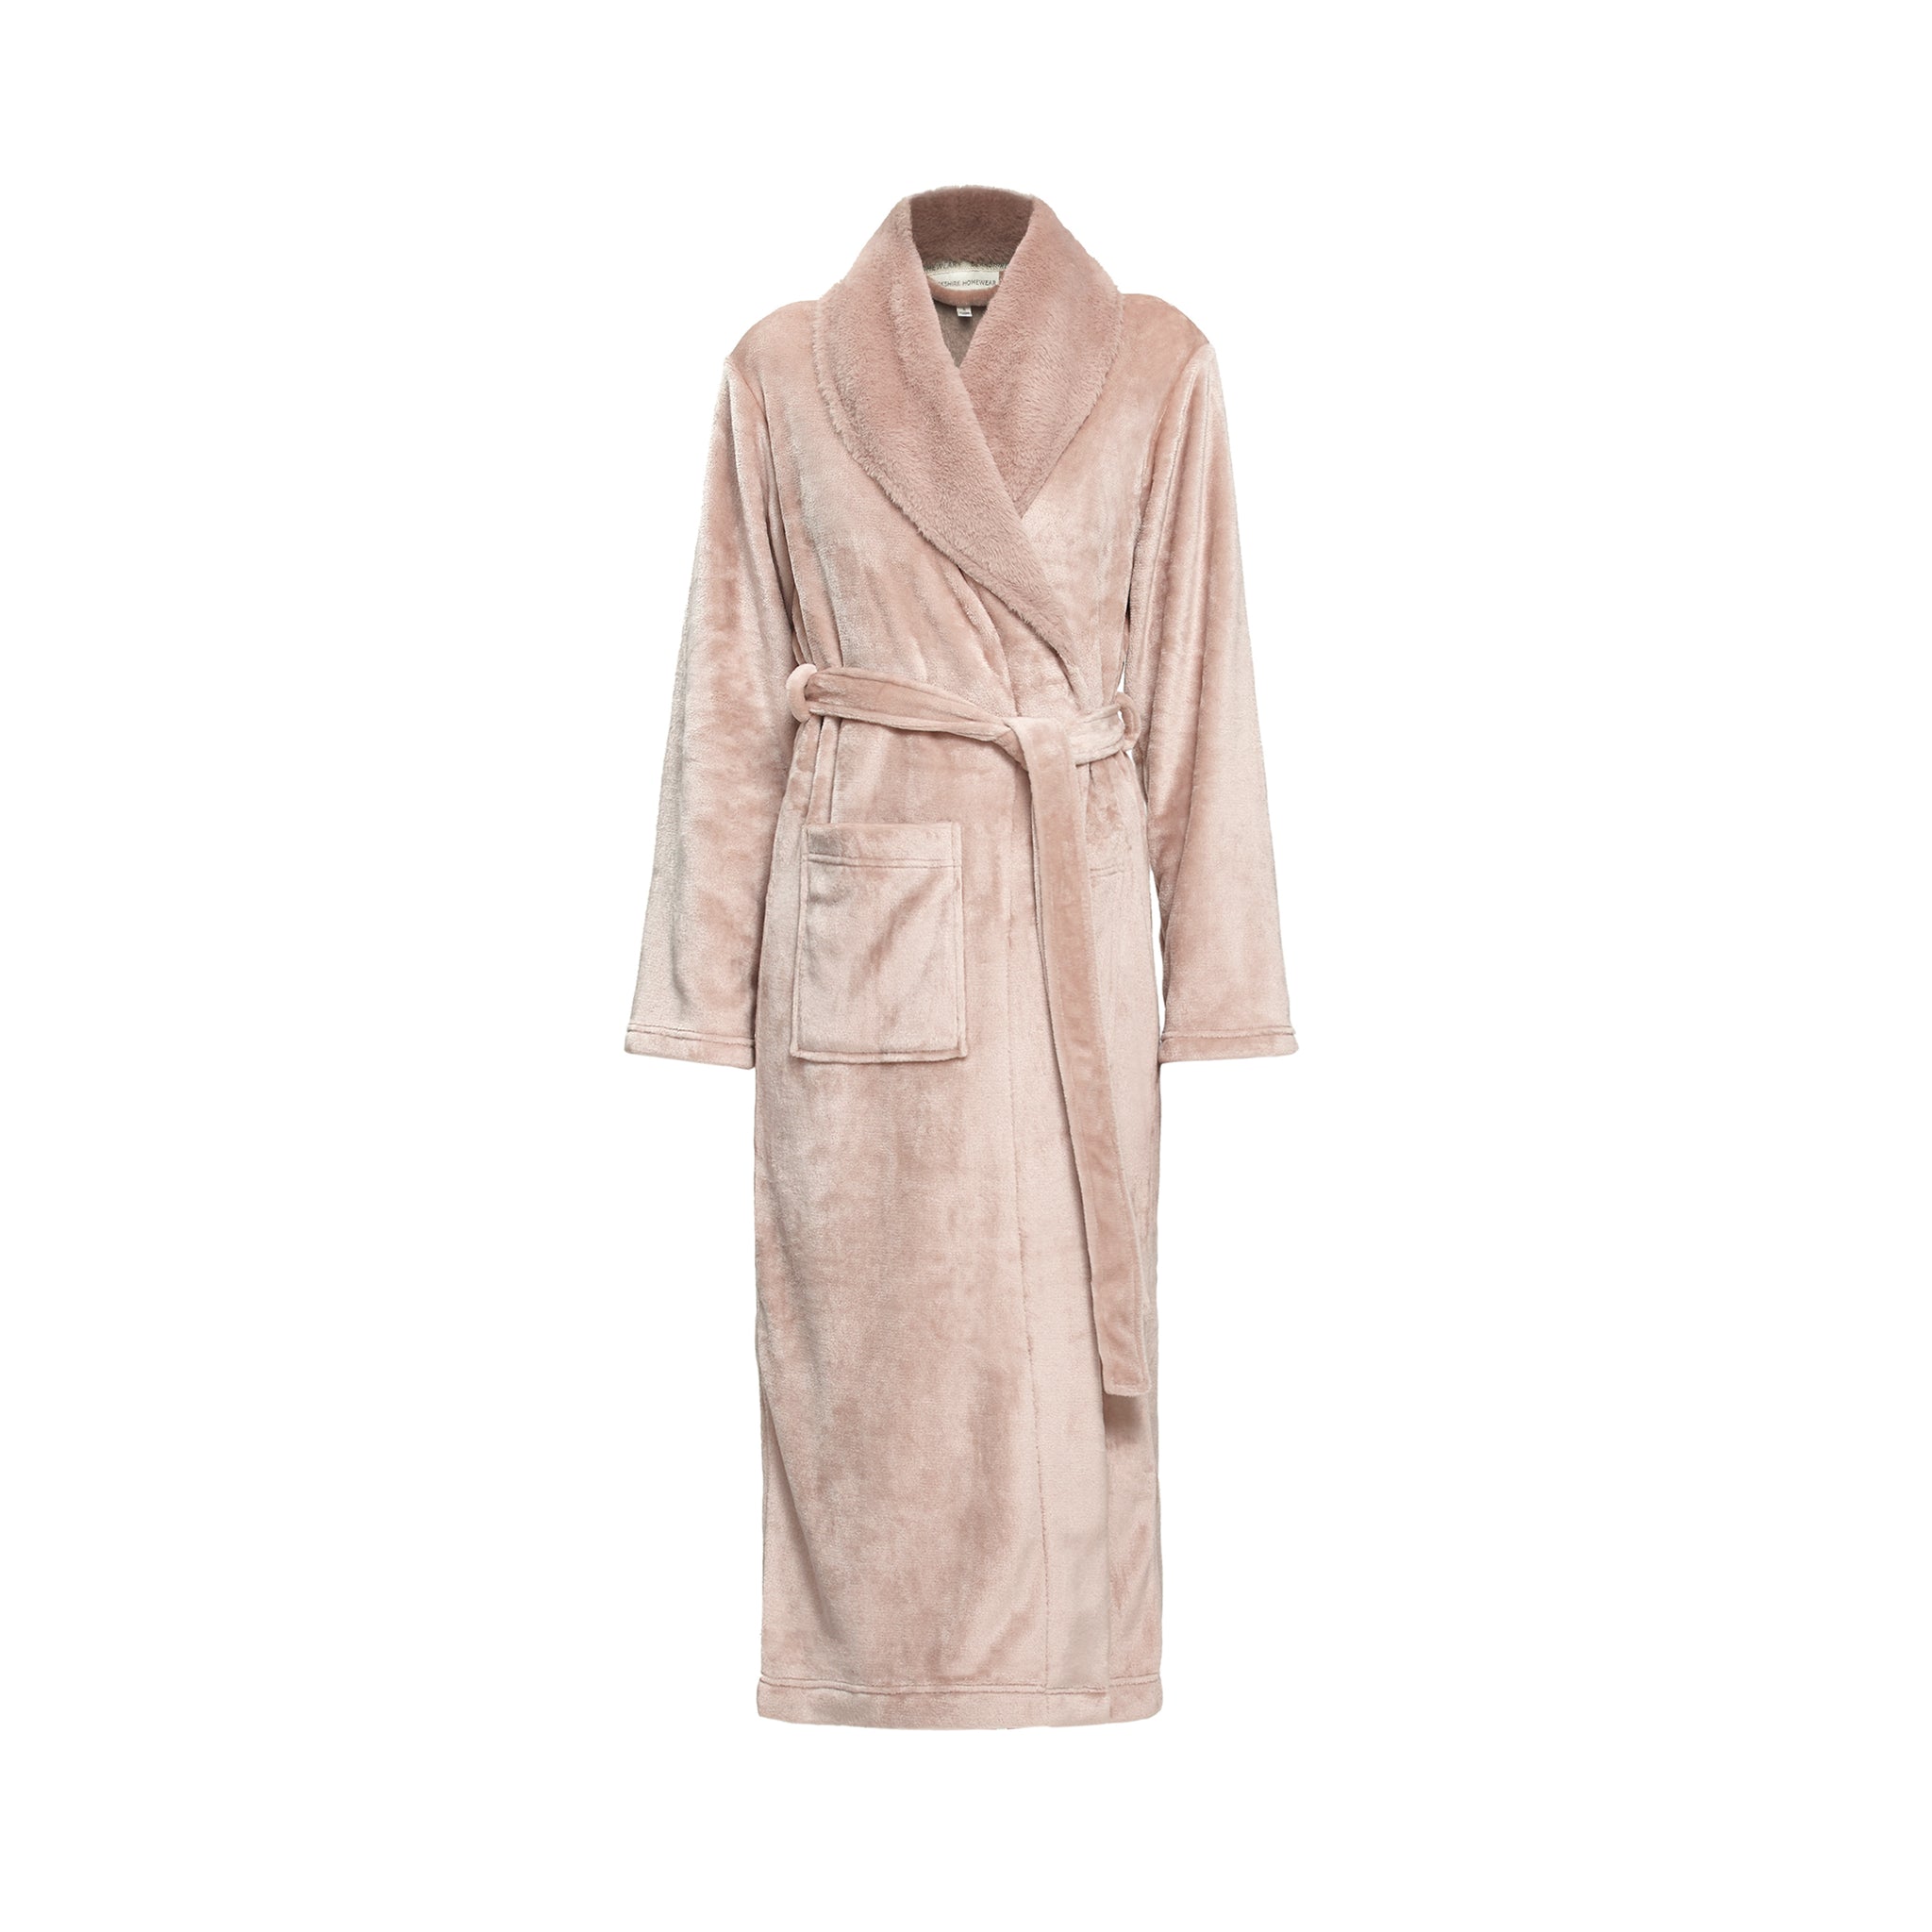 Robes & Loungewear – Berkshire Blanket Inc